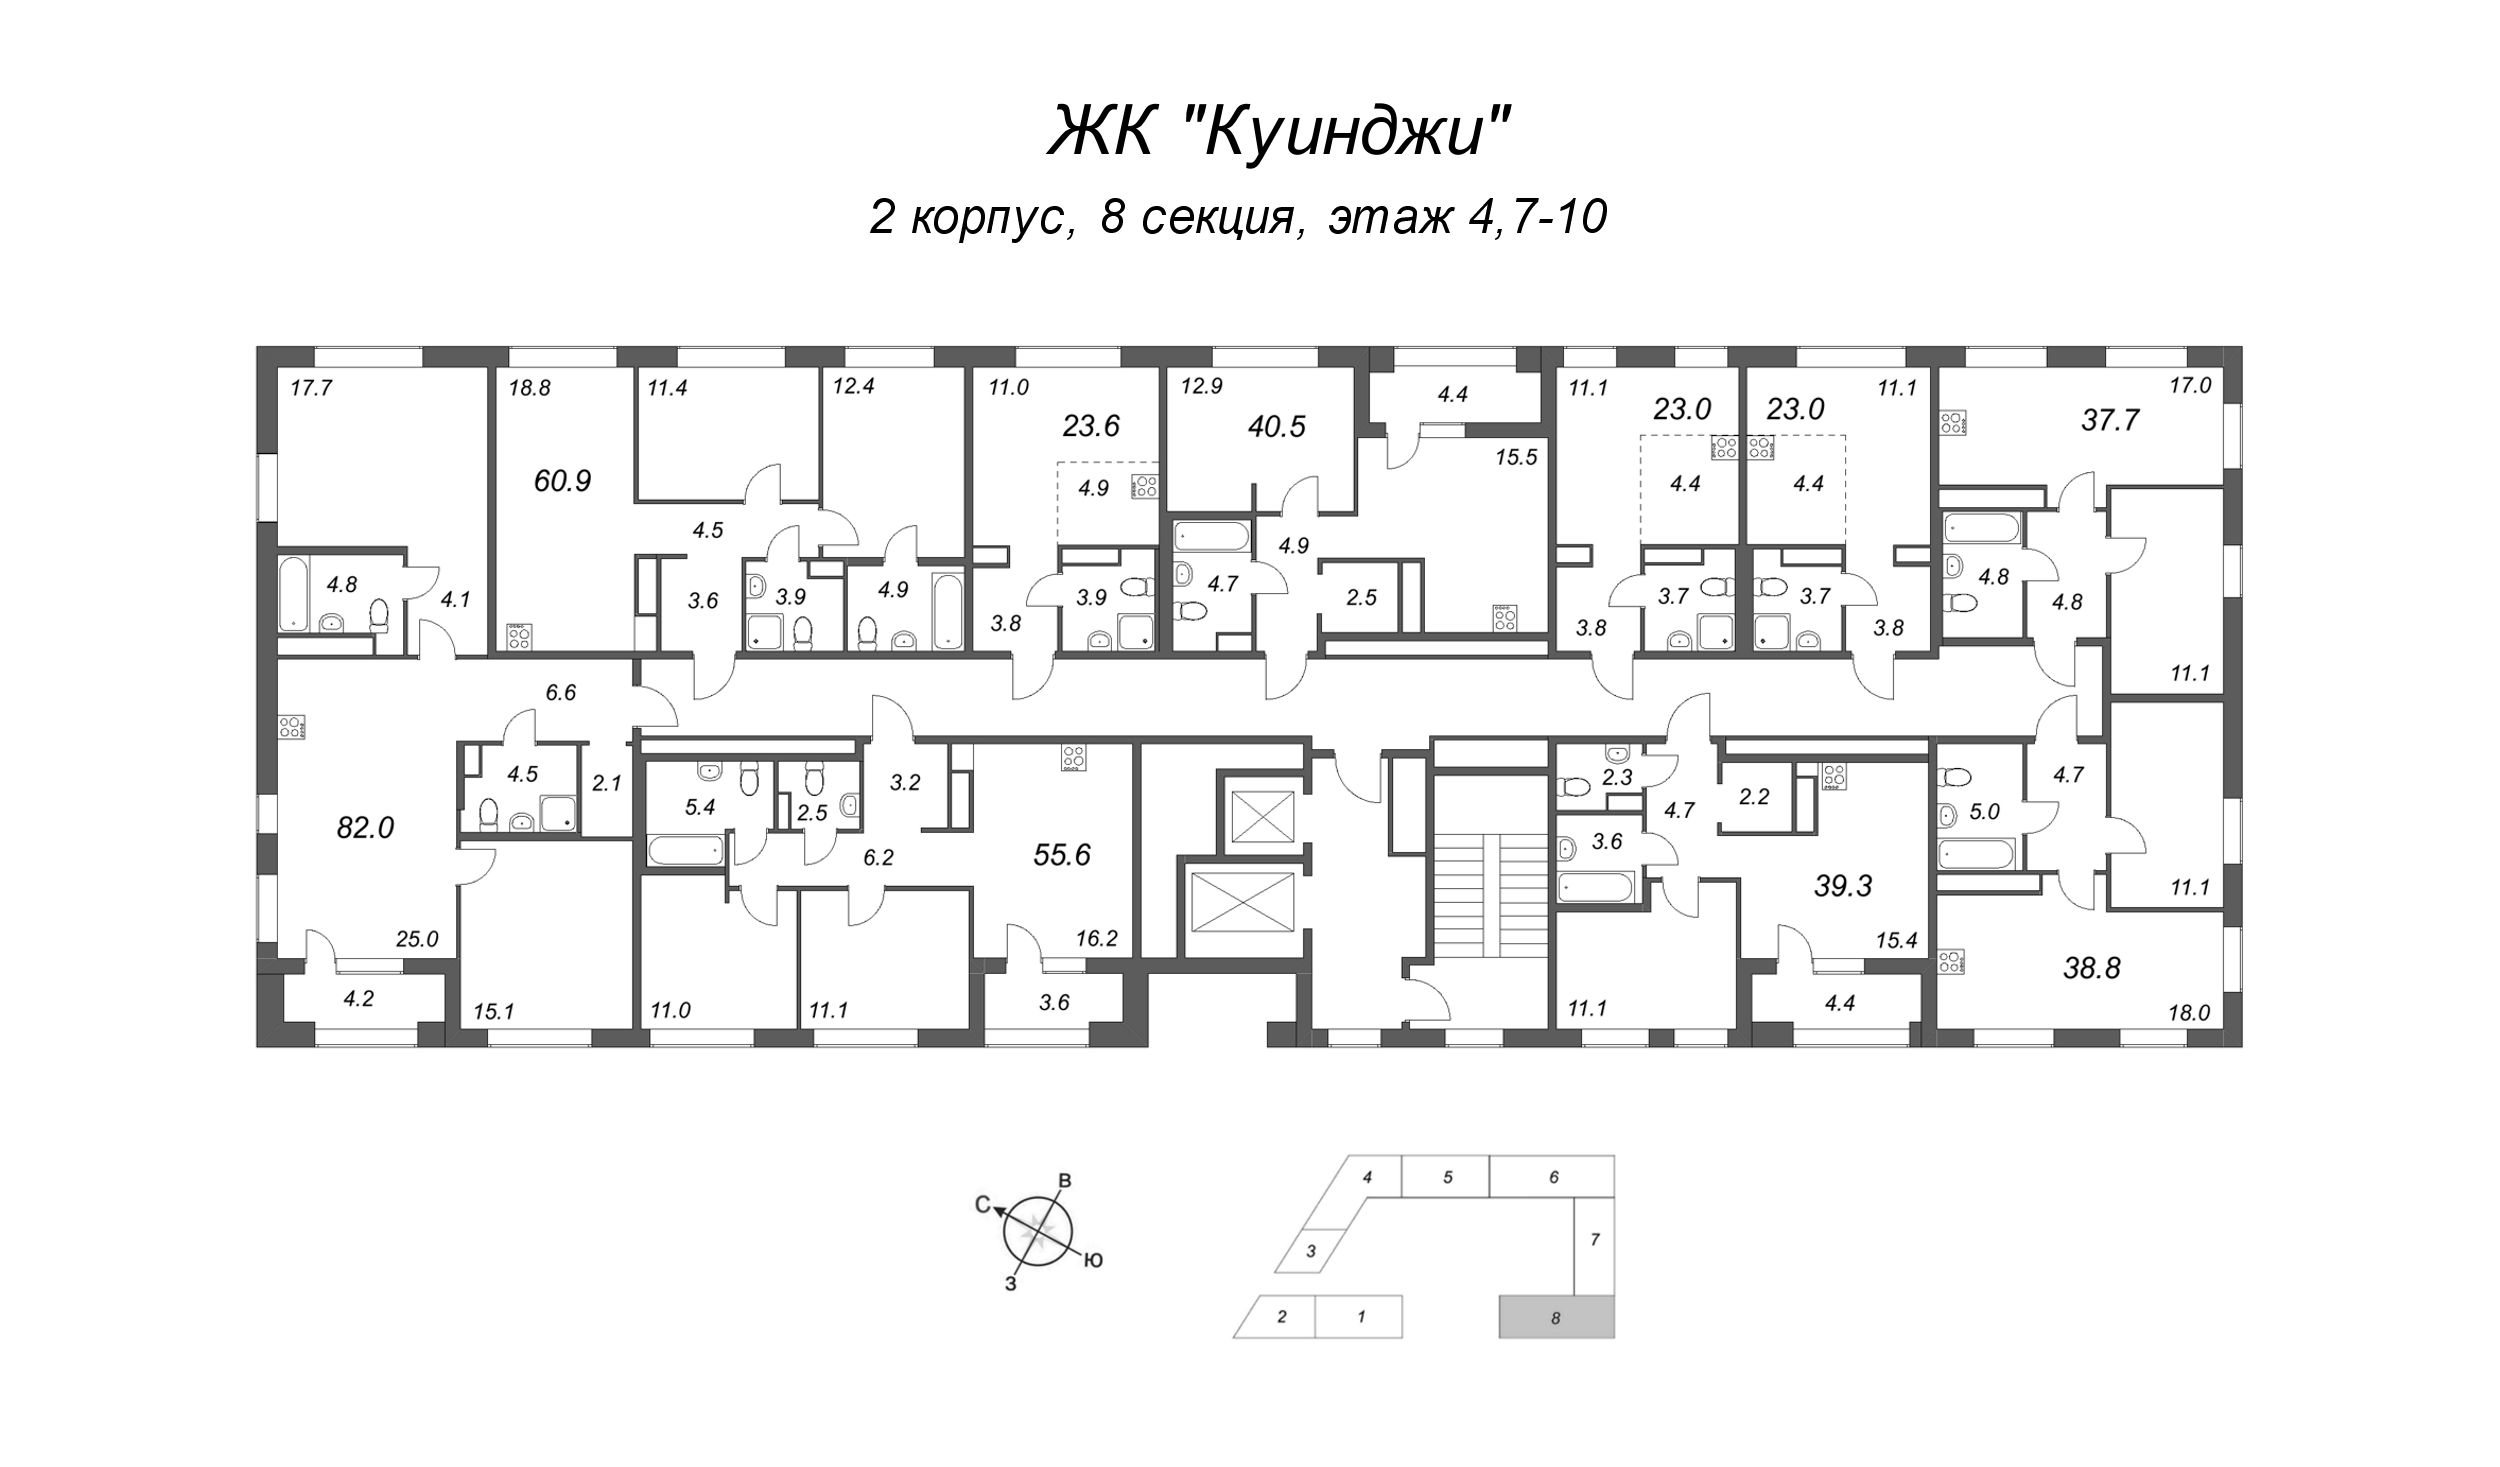 3-комнатная (Евро) квартира, 60.9 м² - планировка этажа